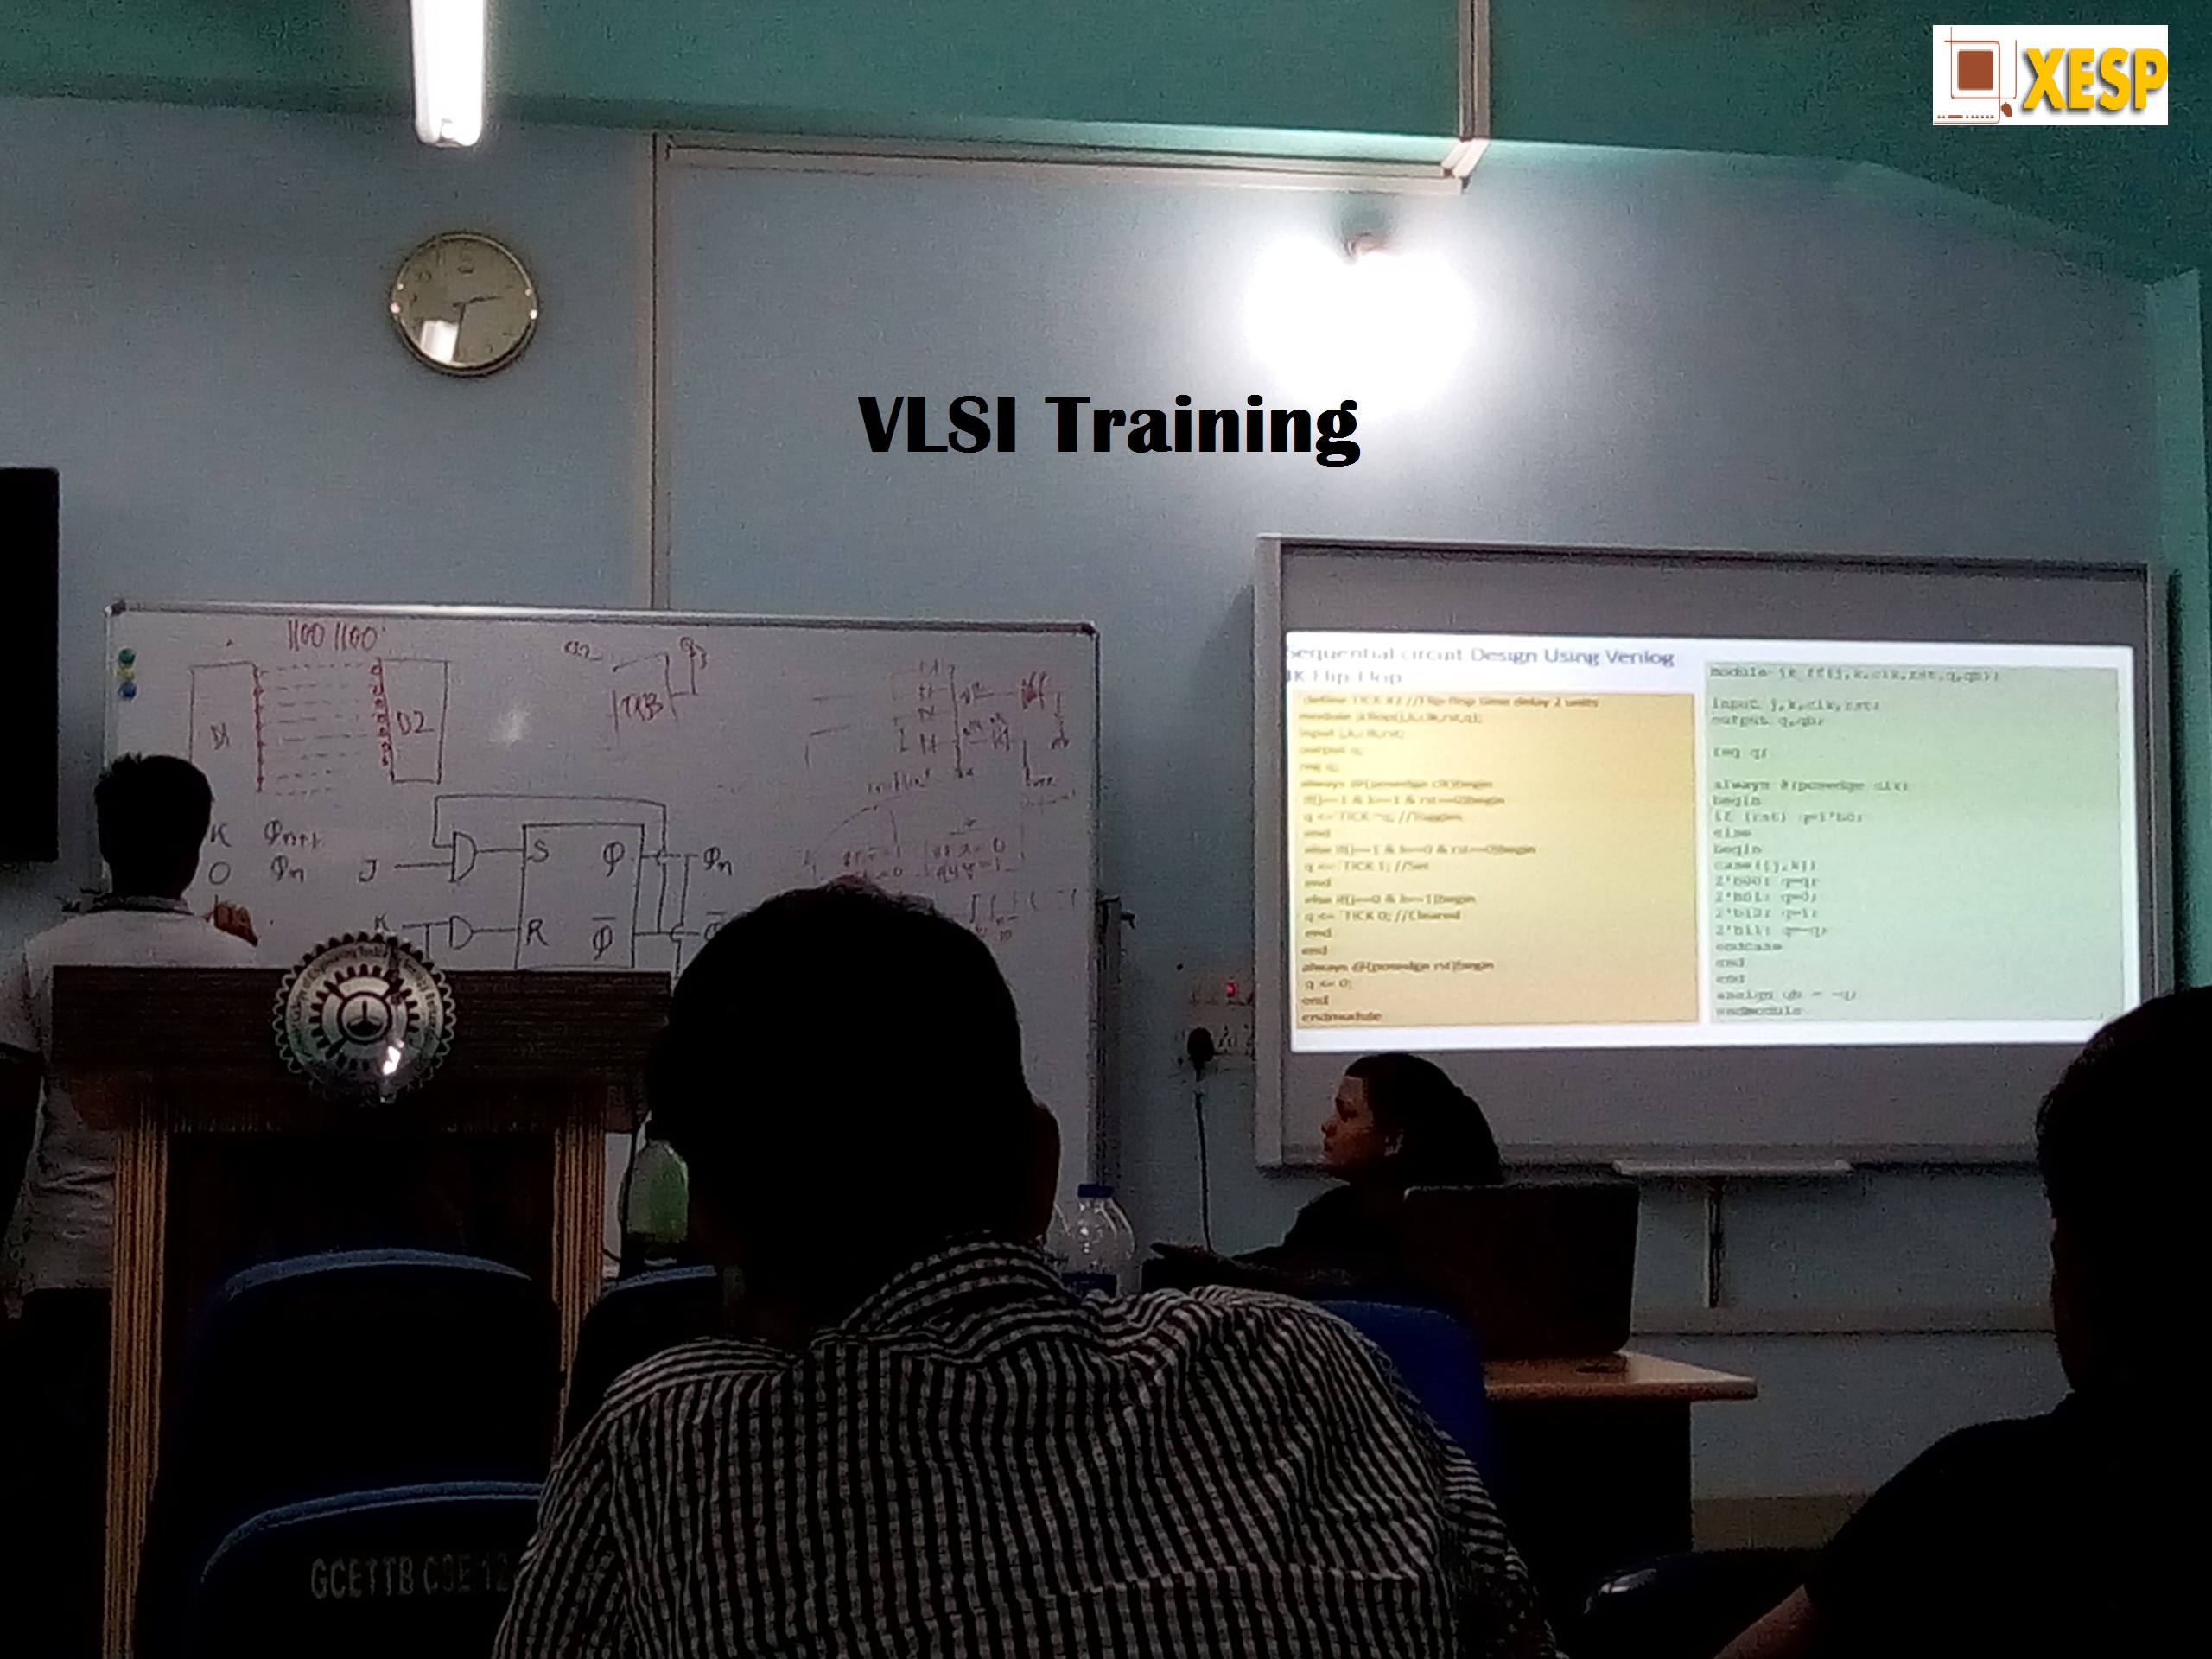 XESP VLSI Training